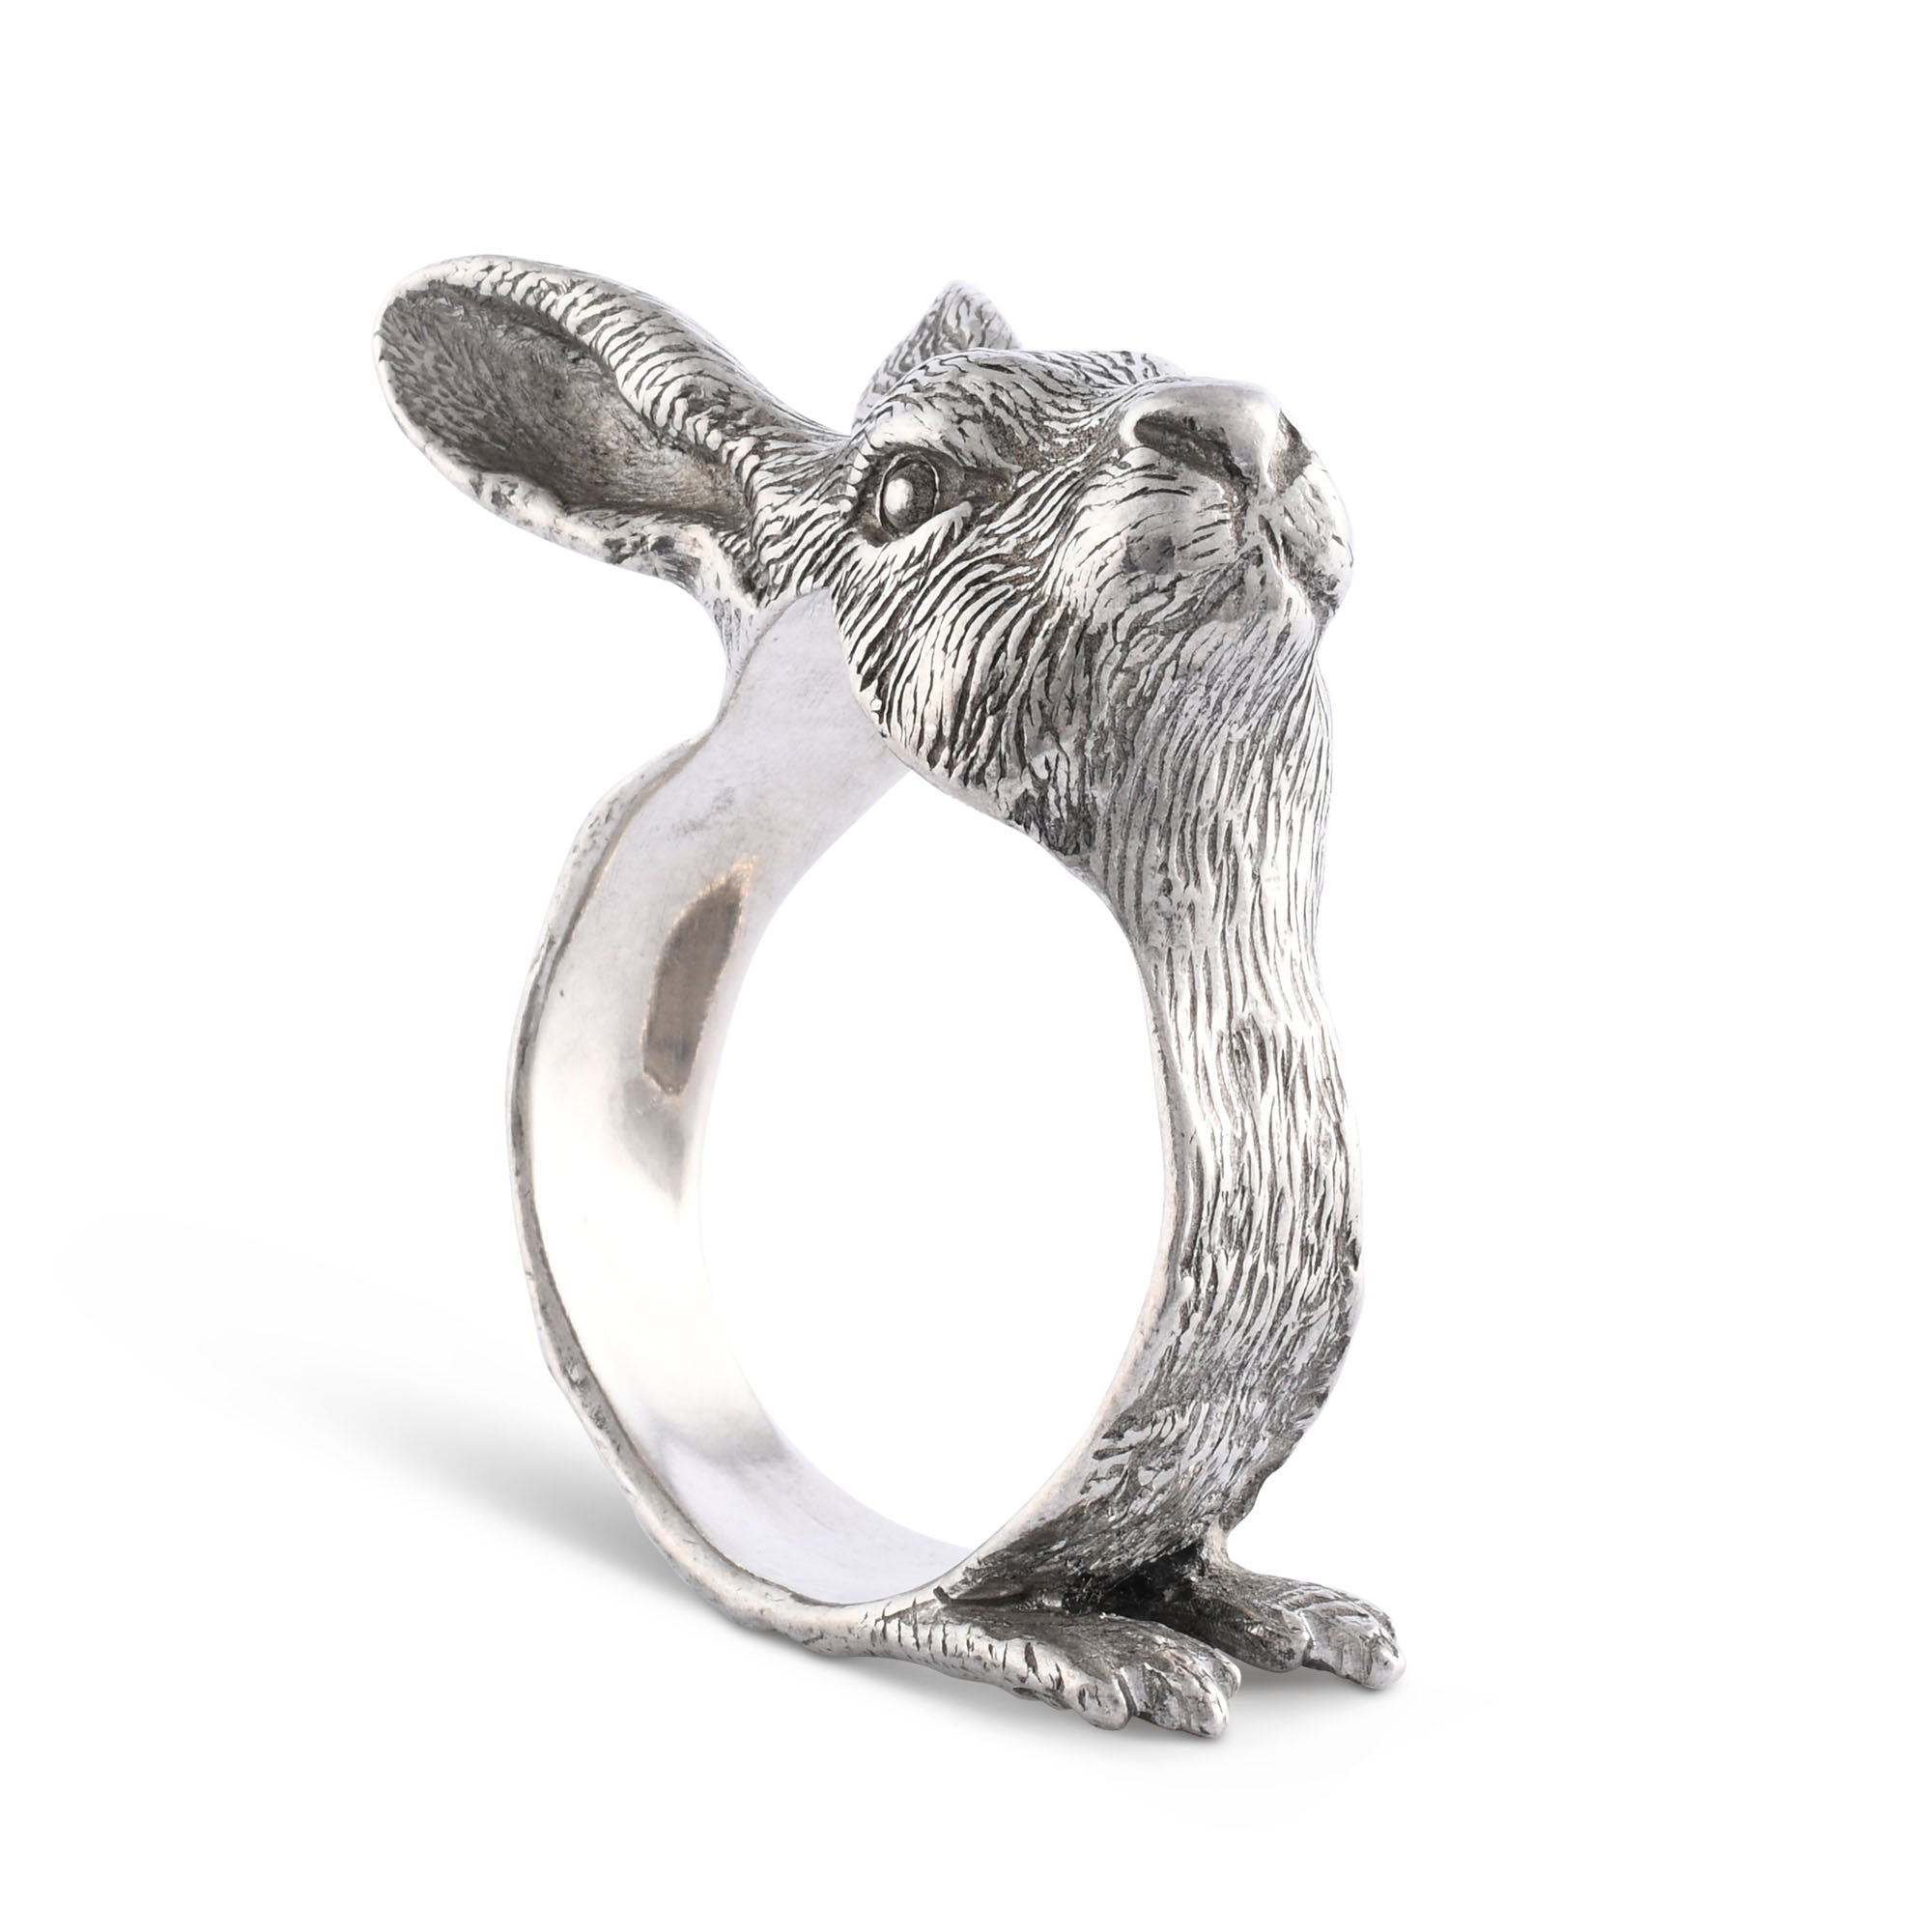 Vagabond House Rabbit Napkin Rings Product Image